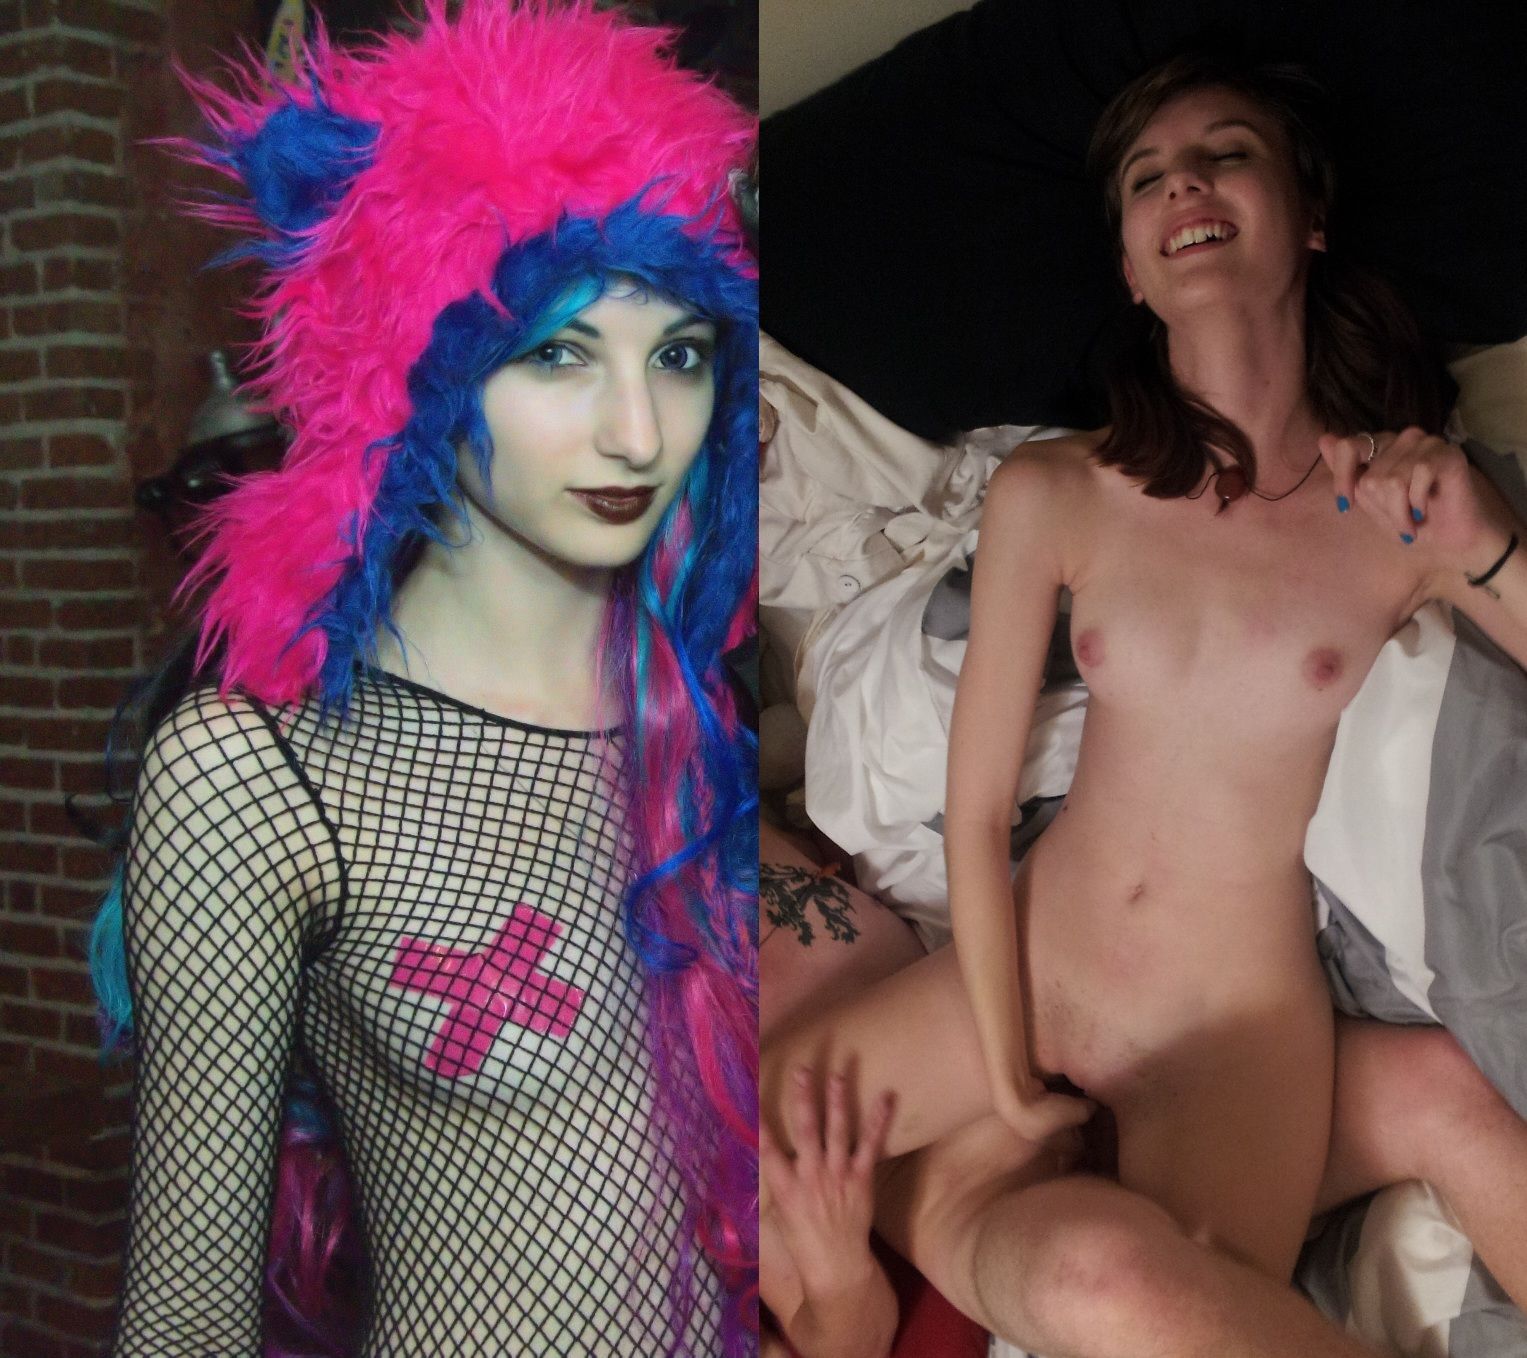 Compilation video of the Festivalsluts subreddit. Rave girls, flashing.